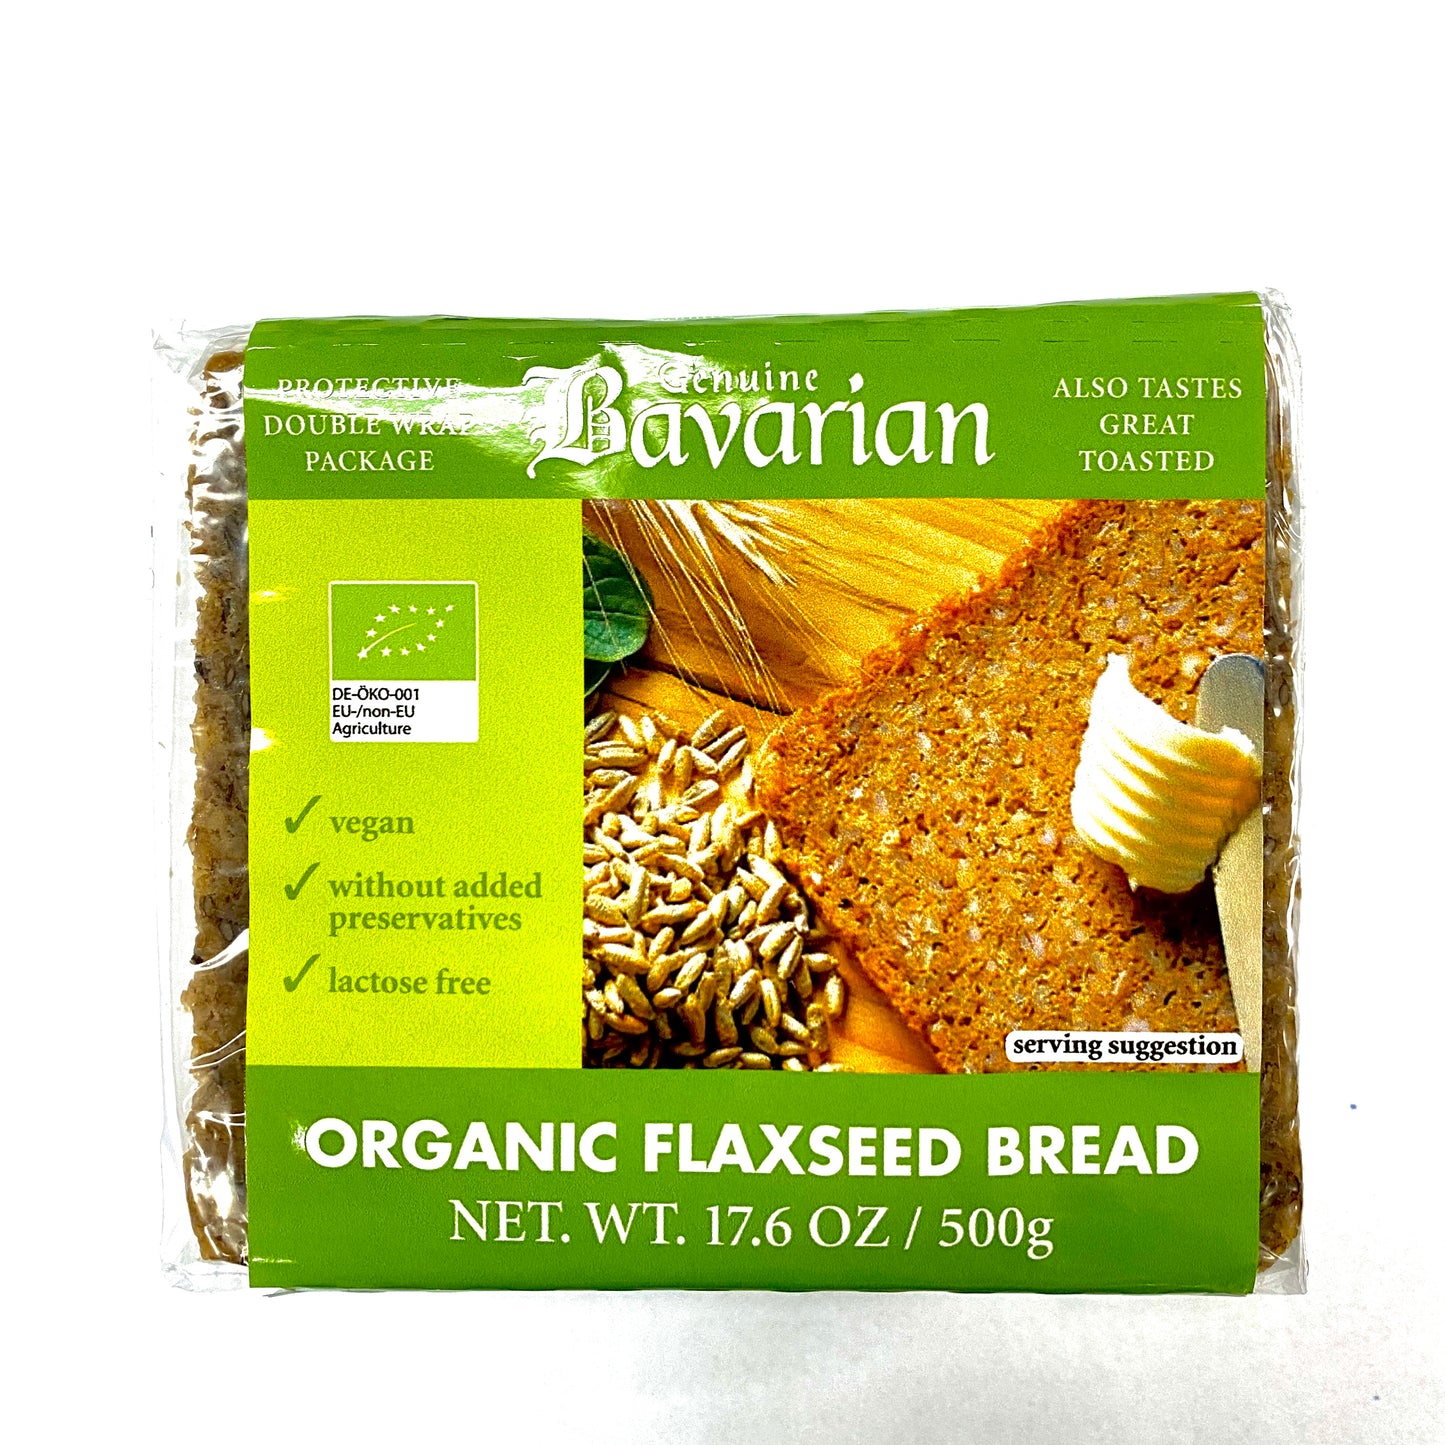 Schluender Bavarian Organic Flexseed Bread